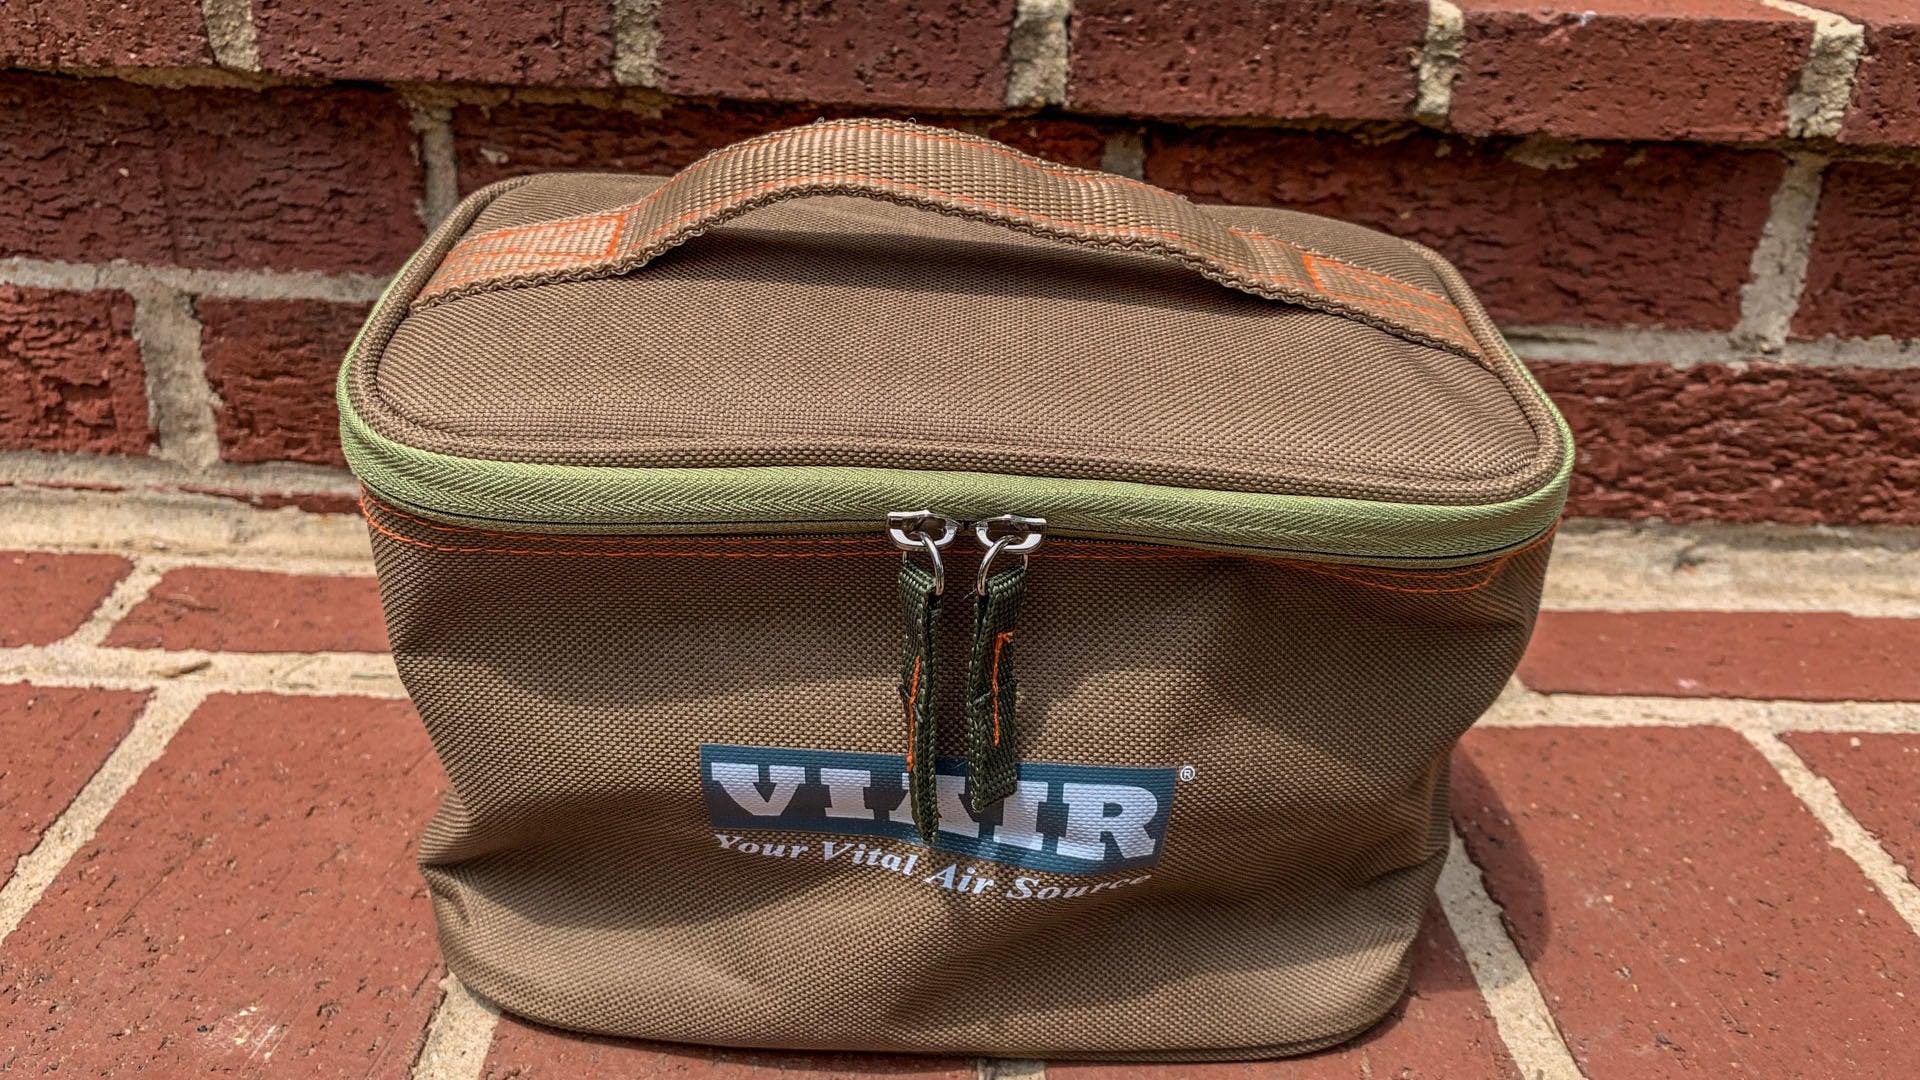 The Viair bag.